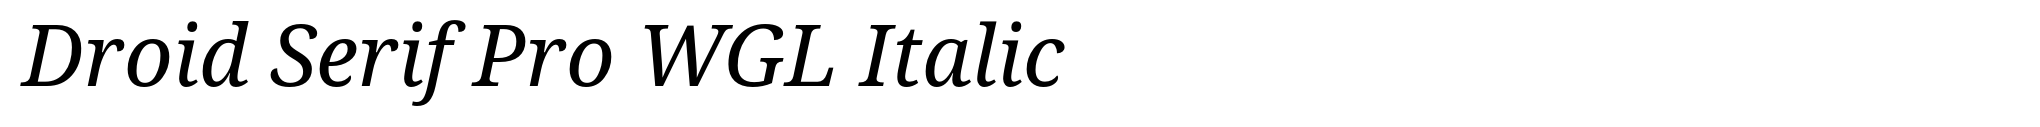 Droid Serif Pro WGL Italic image